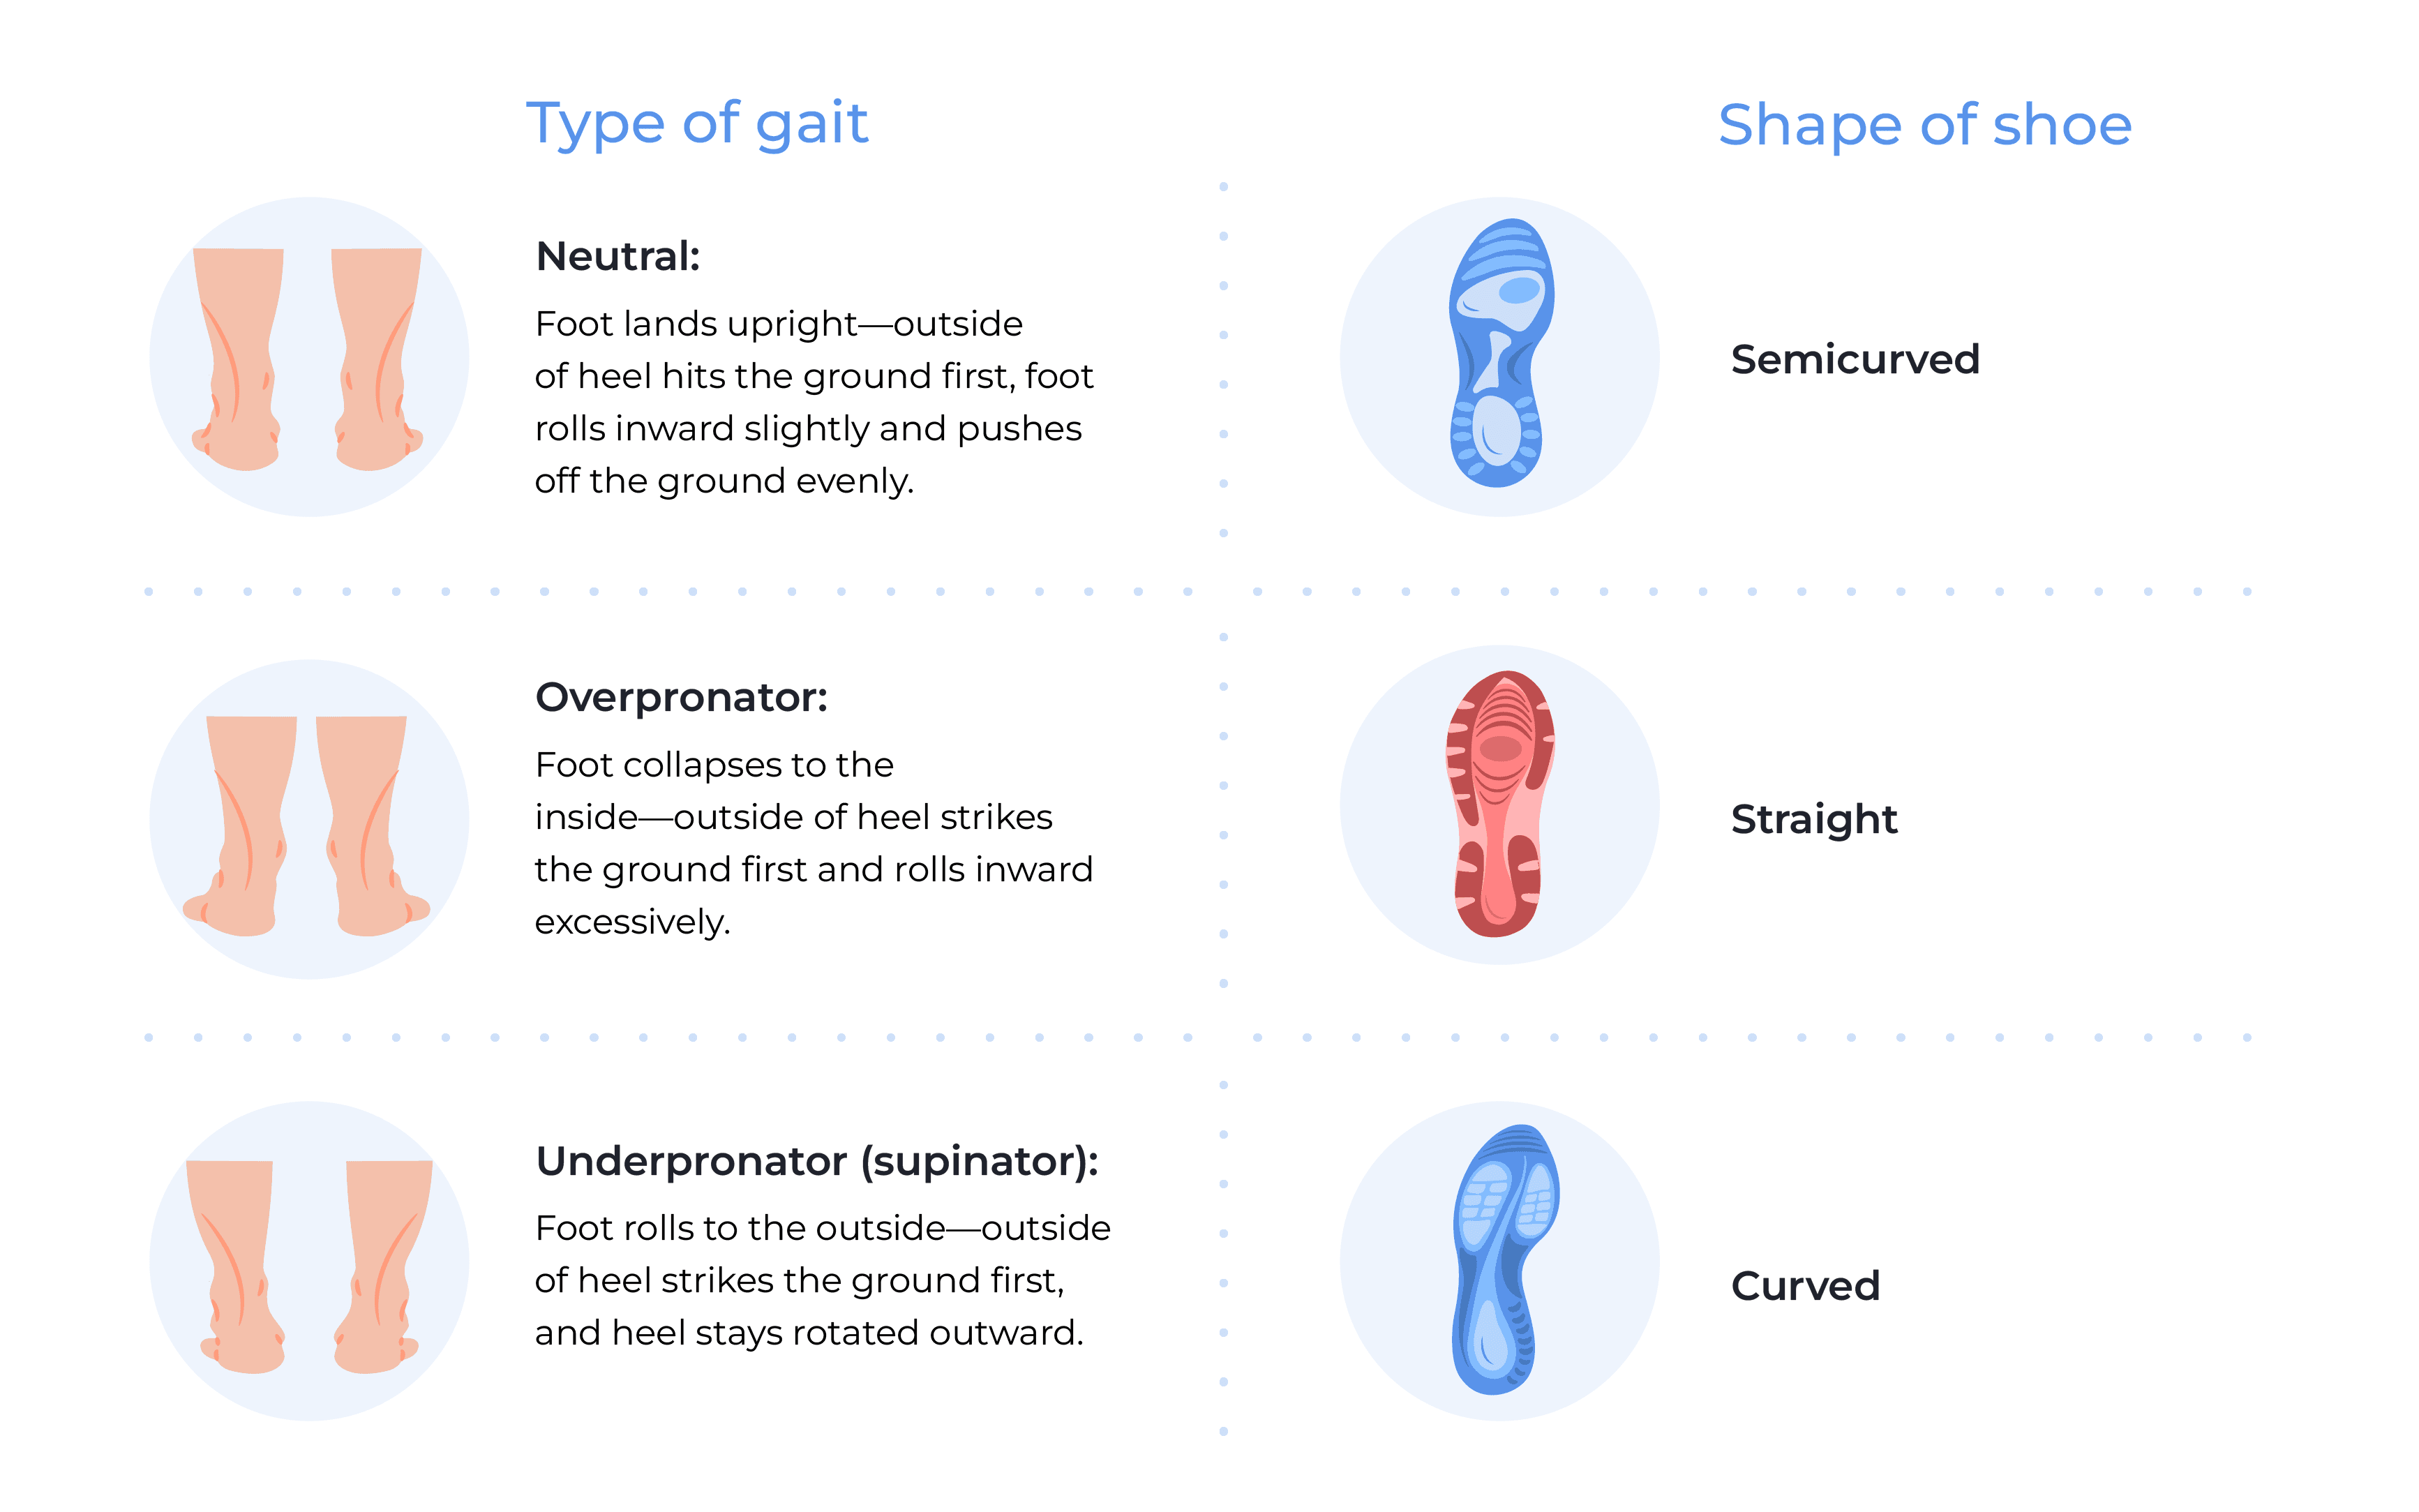 Determine shape of shoe based on gait.